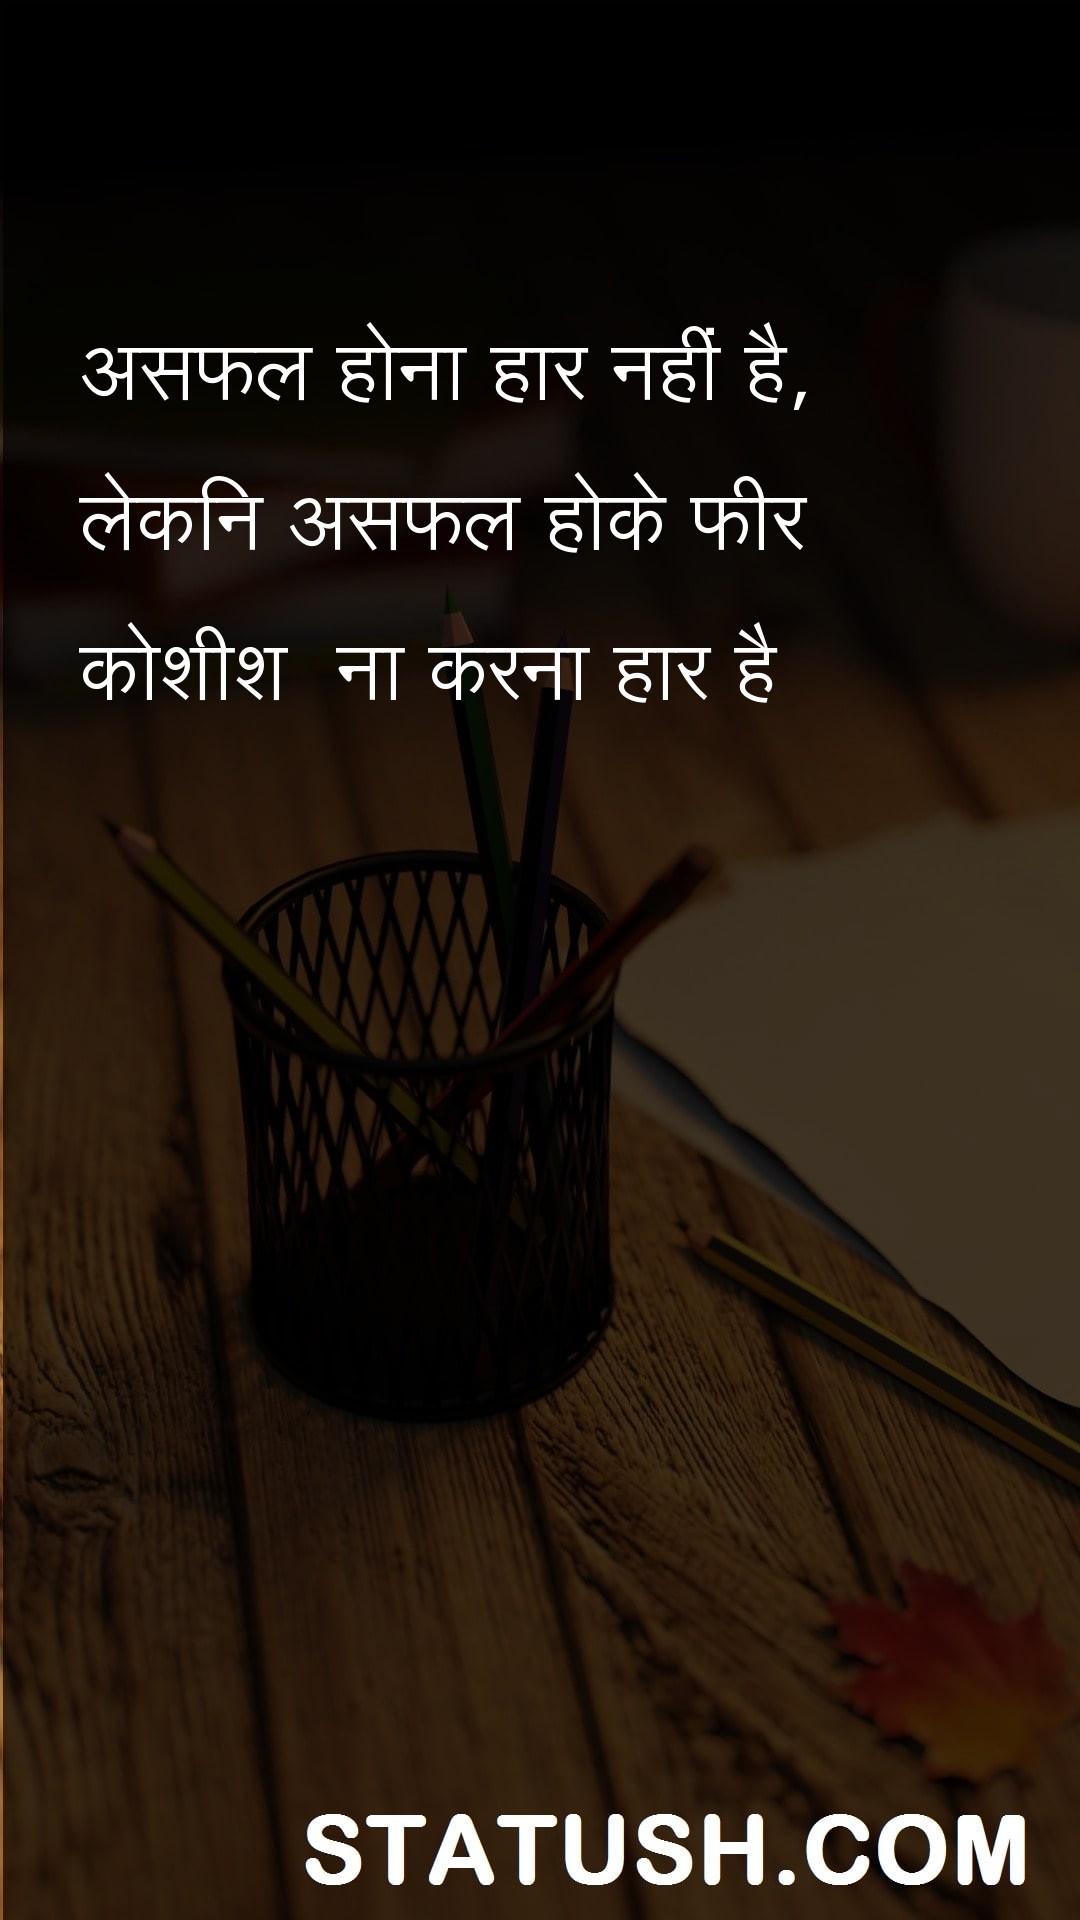 Failure is not defeat - Hindi Quotes at statush.com